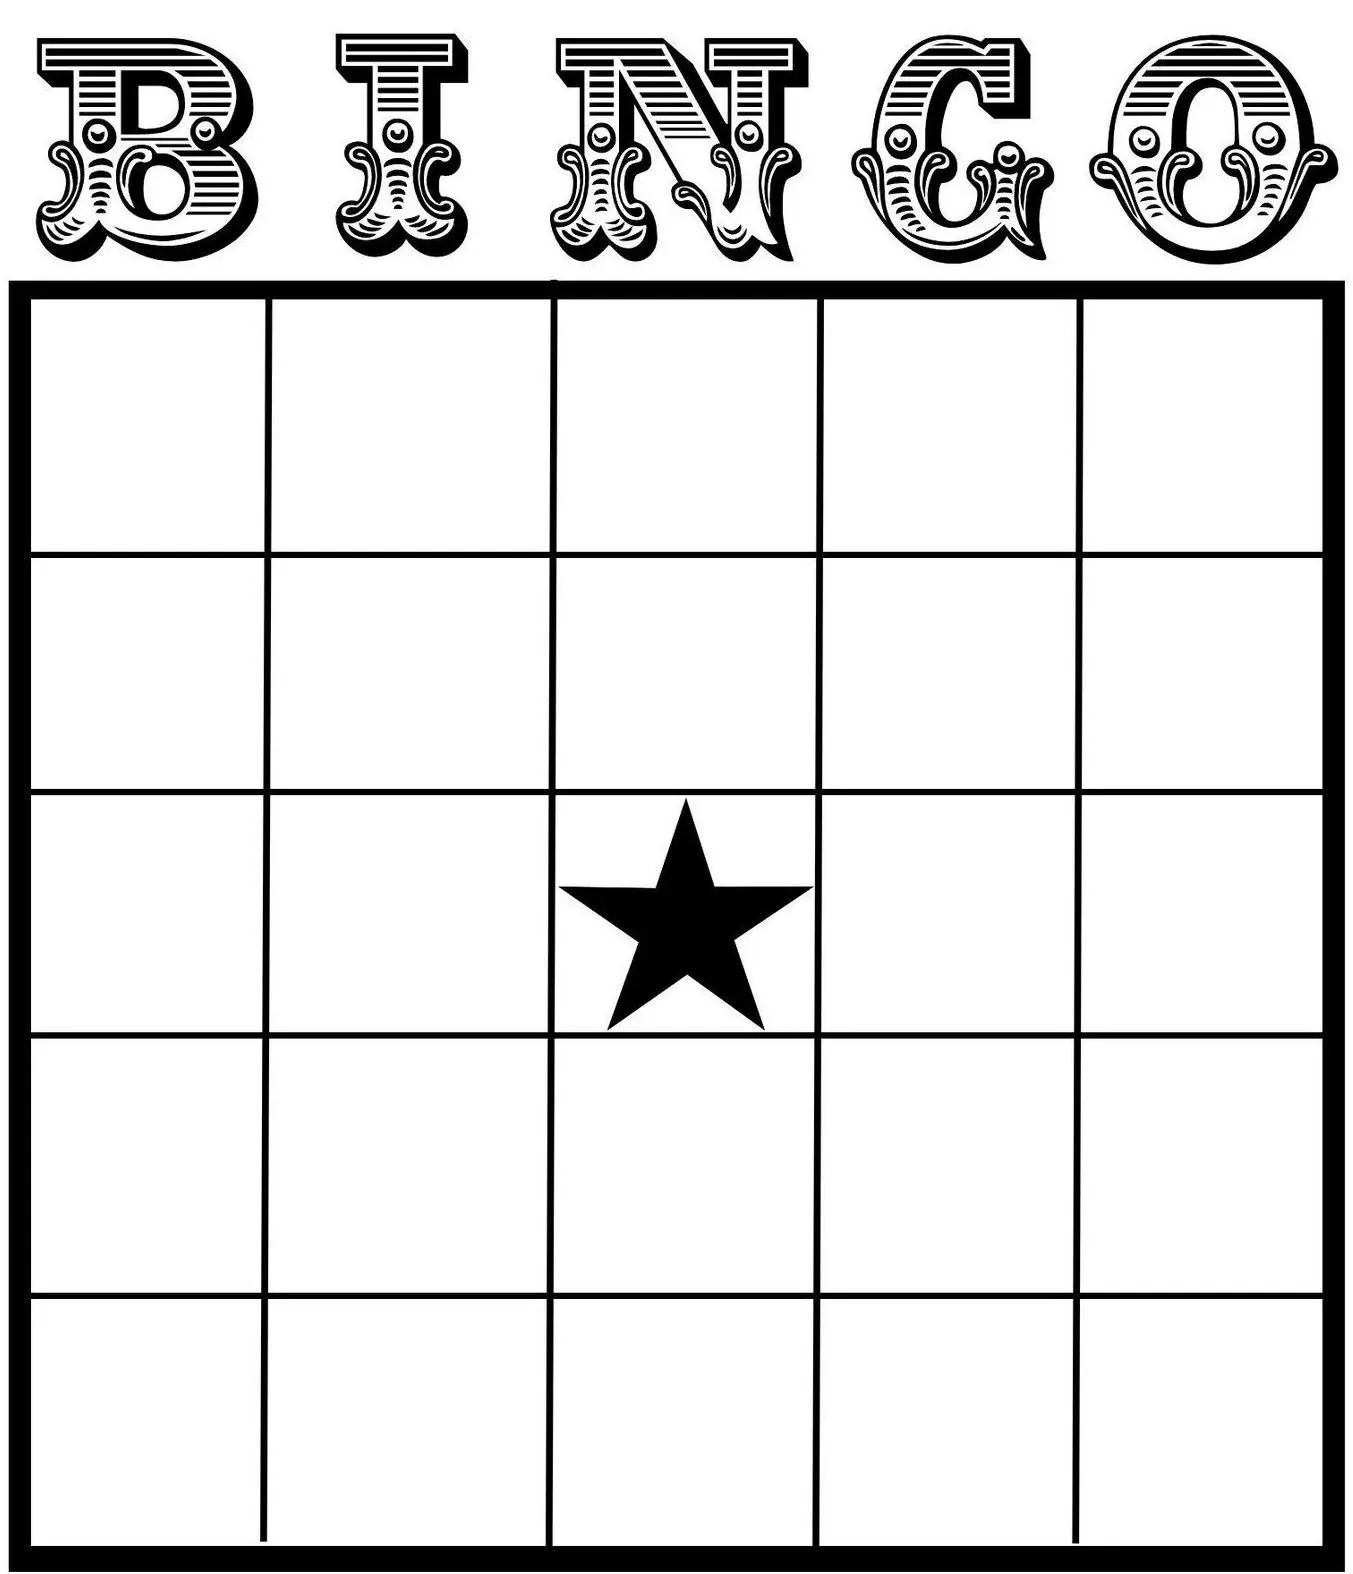 nature bingo printable free